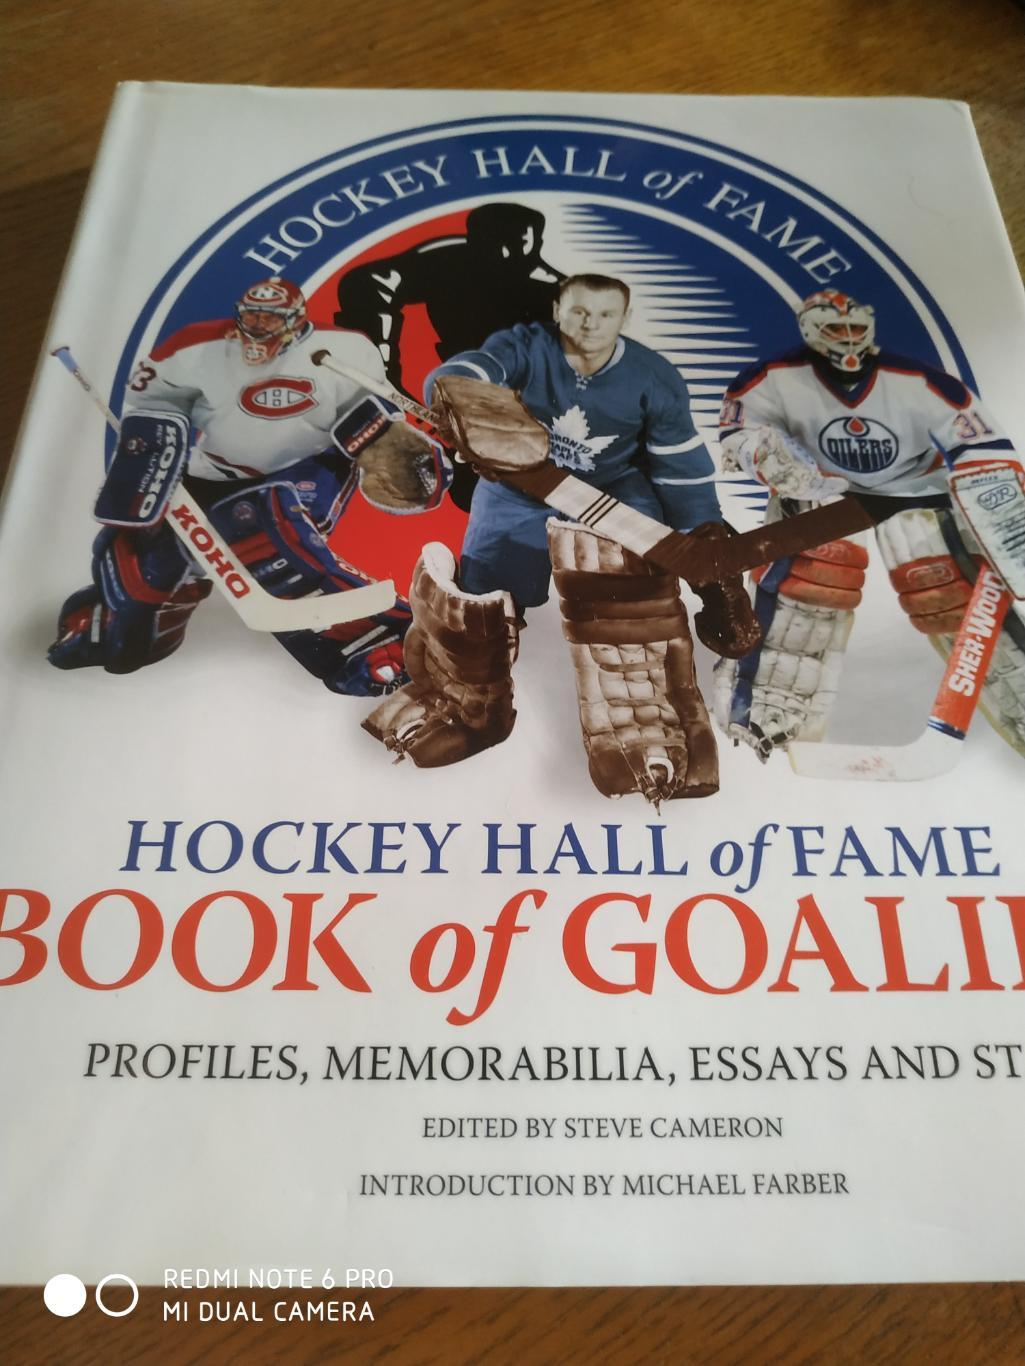 ХОККЕЙ КНИГА НХЛ HOCKEY HALL OF FAME BOOK OF GOALIES